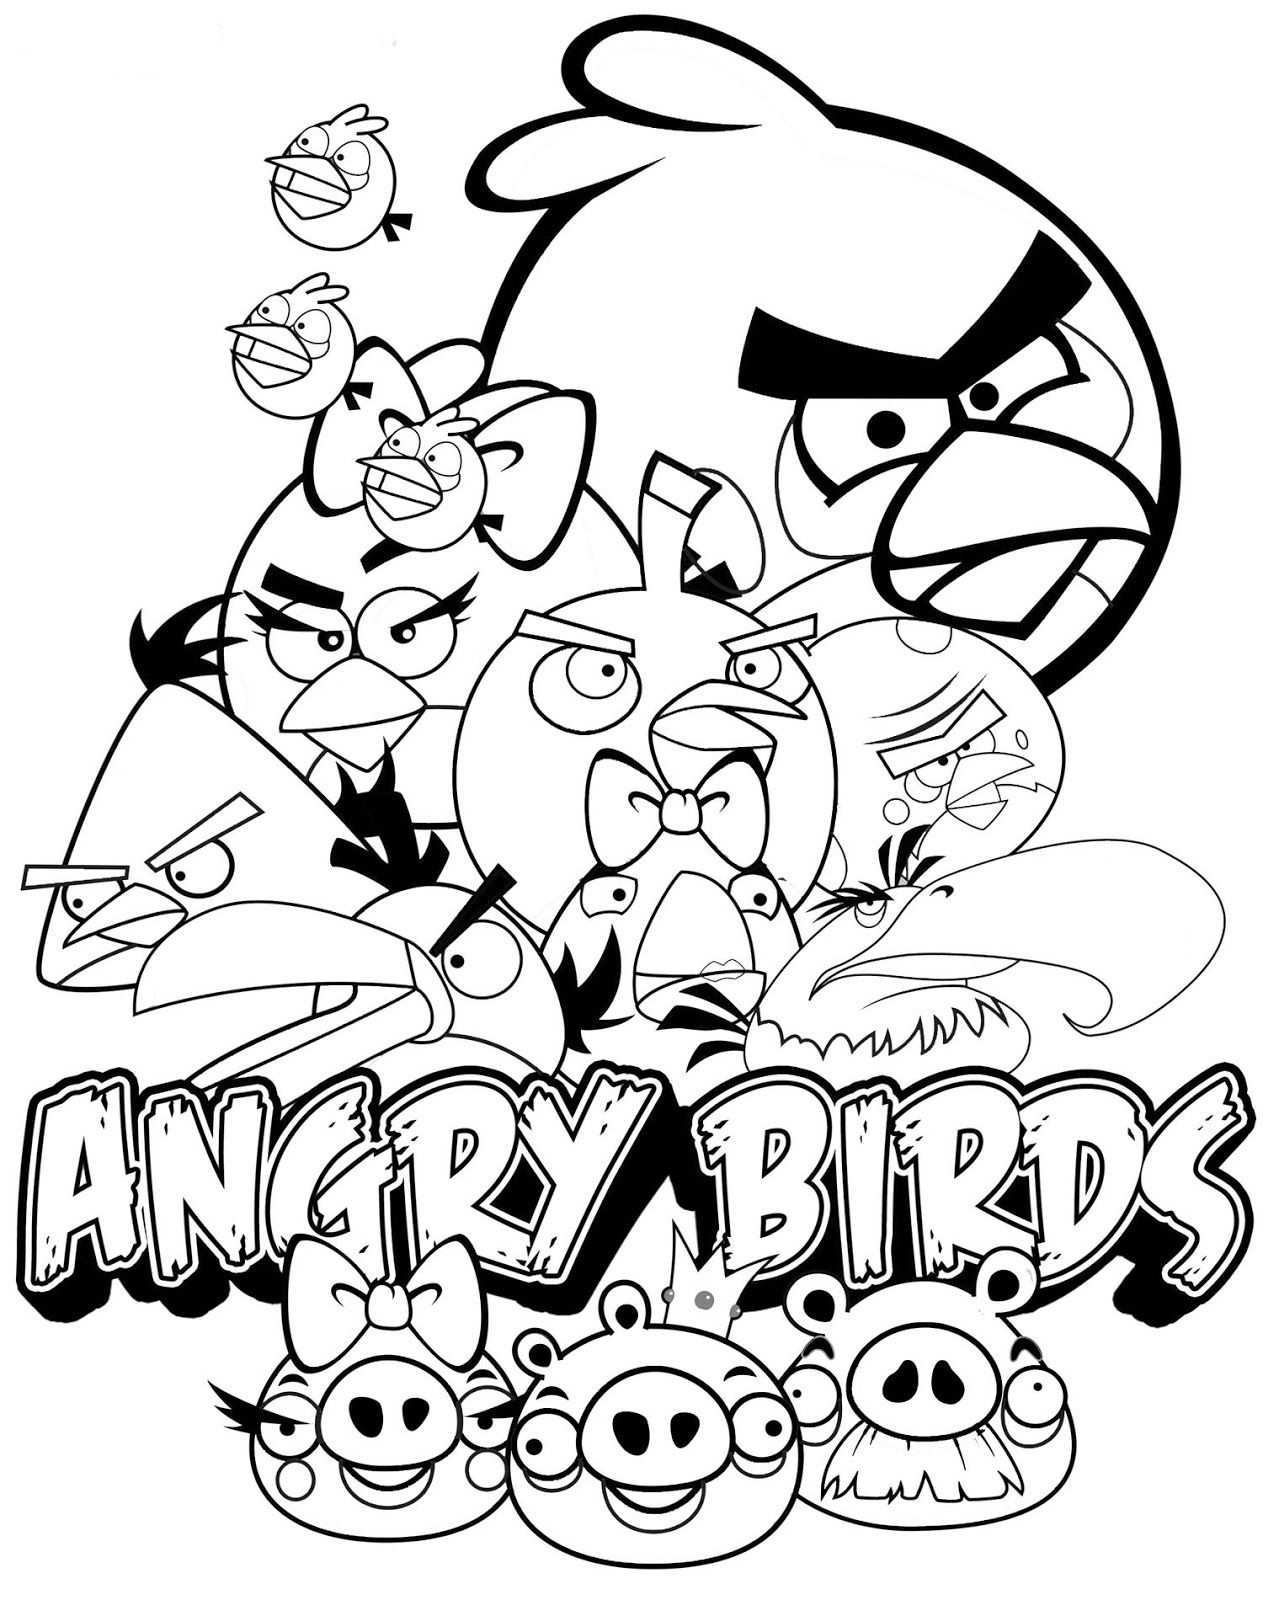 Angry Birds Kleurplaten Poster Bird Coloring Pages Coloring Pages Coloring Pages For Kids